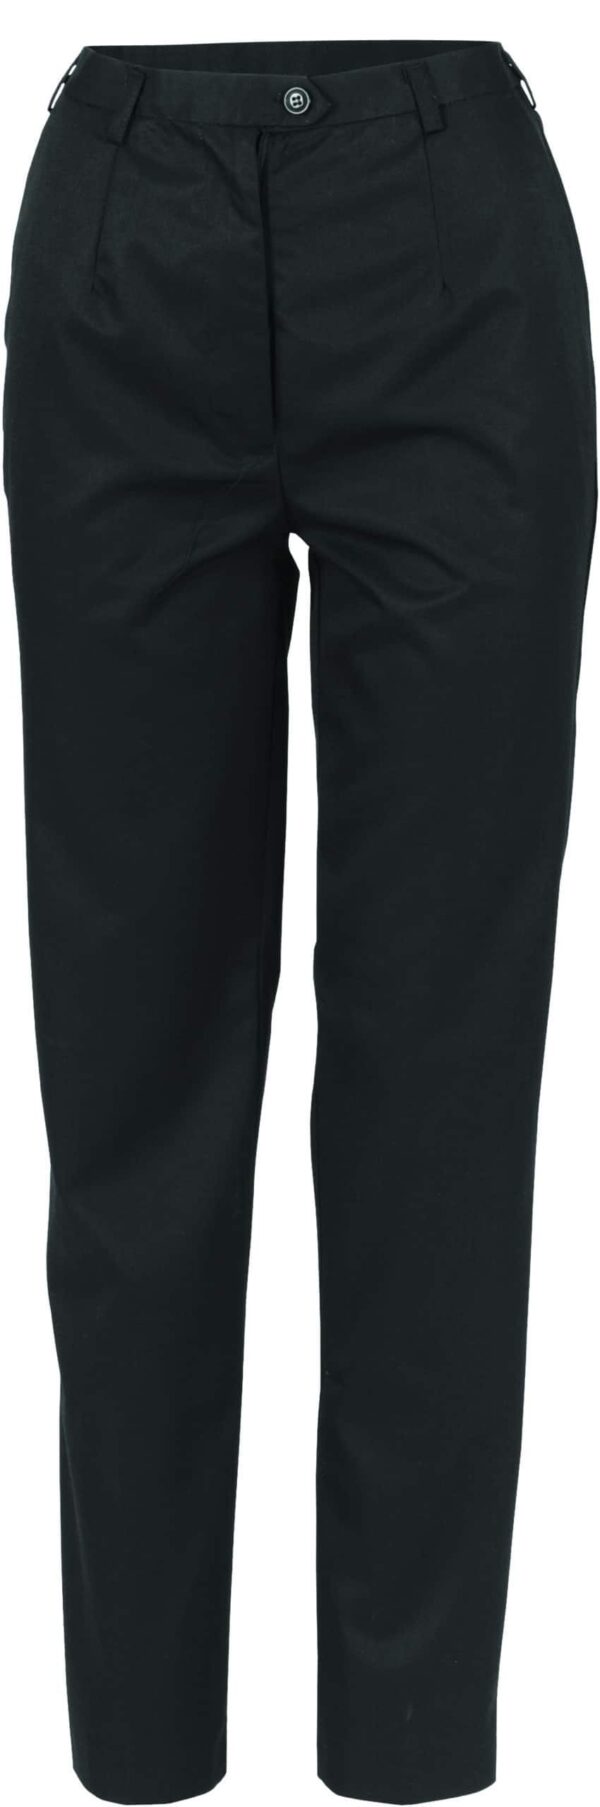 DNC Workwear Ladies P/V Flat Front Pants